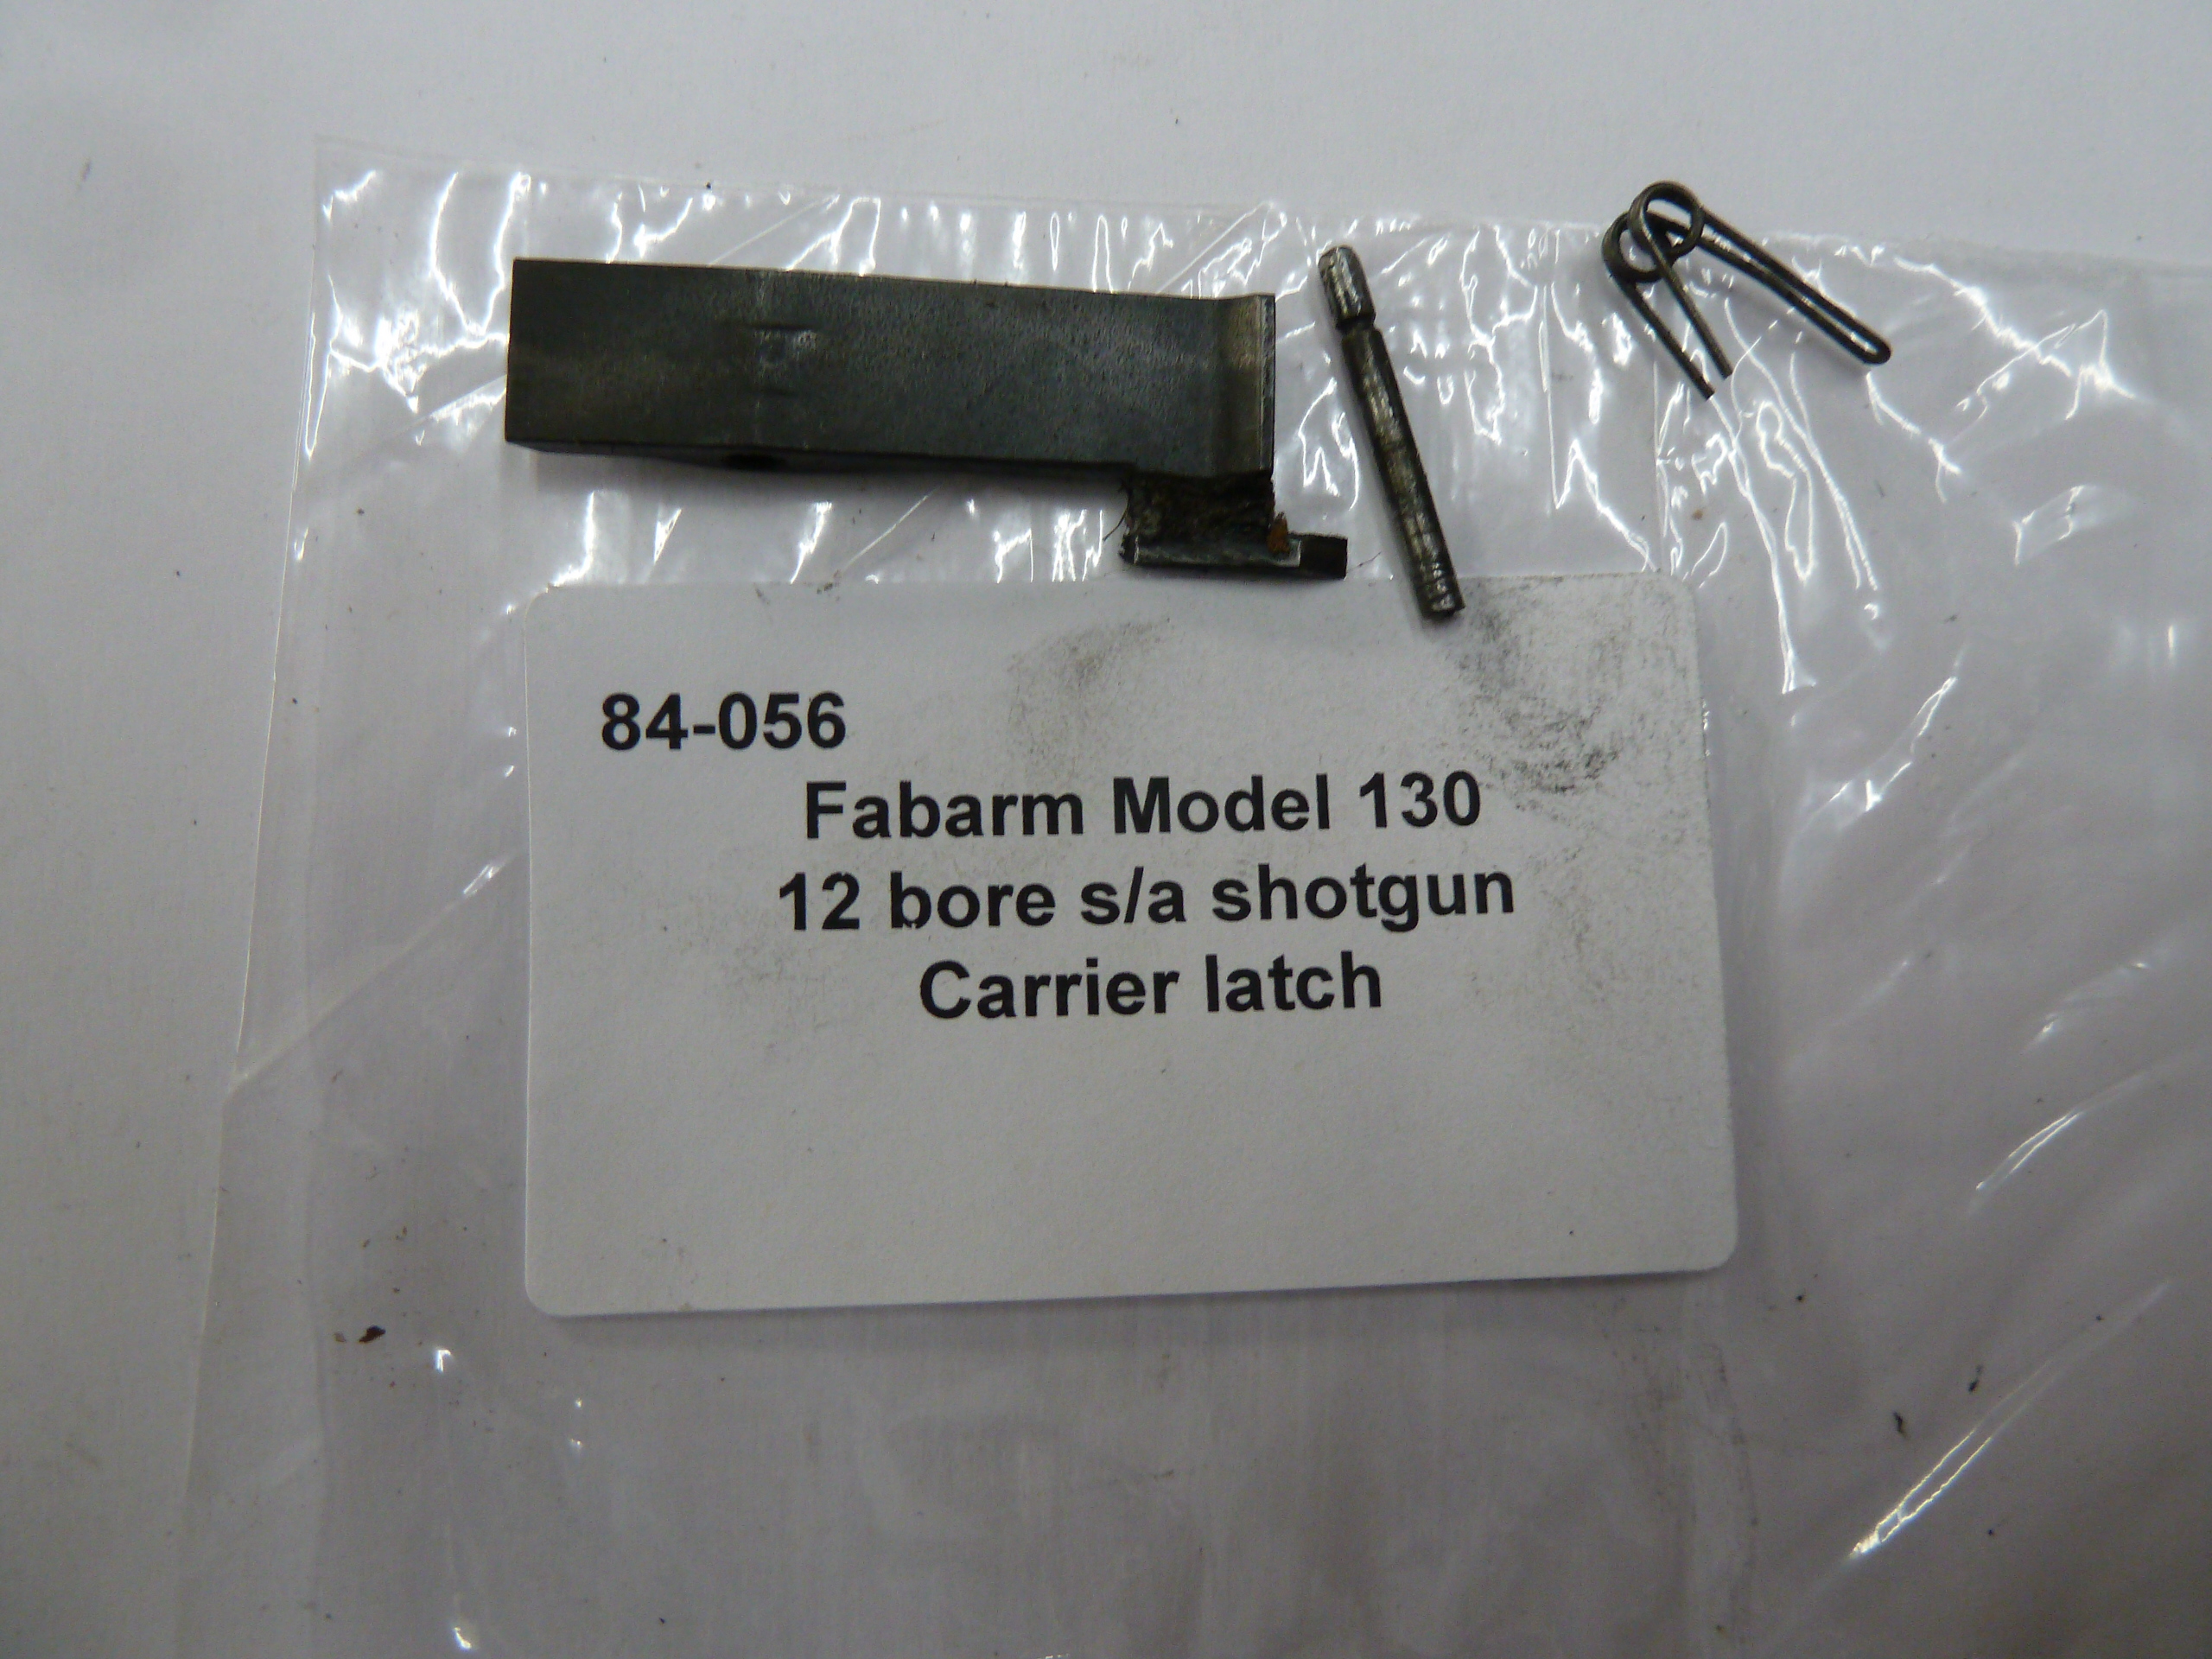 Fabarm Model 130 carrier latch